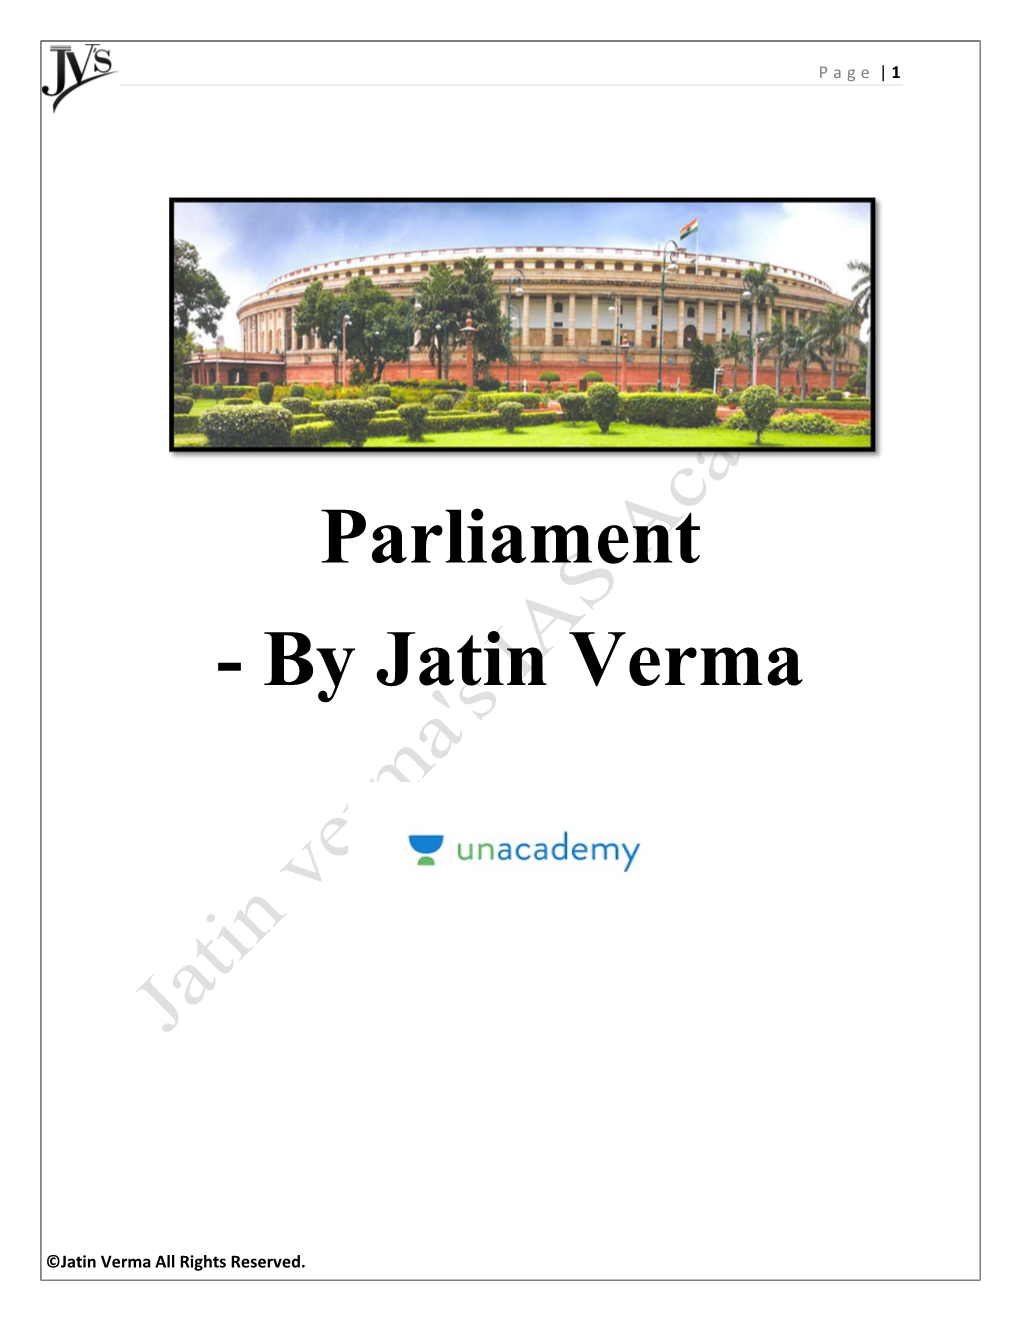 Parliament - by Jatin Verma